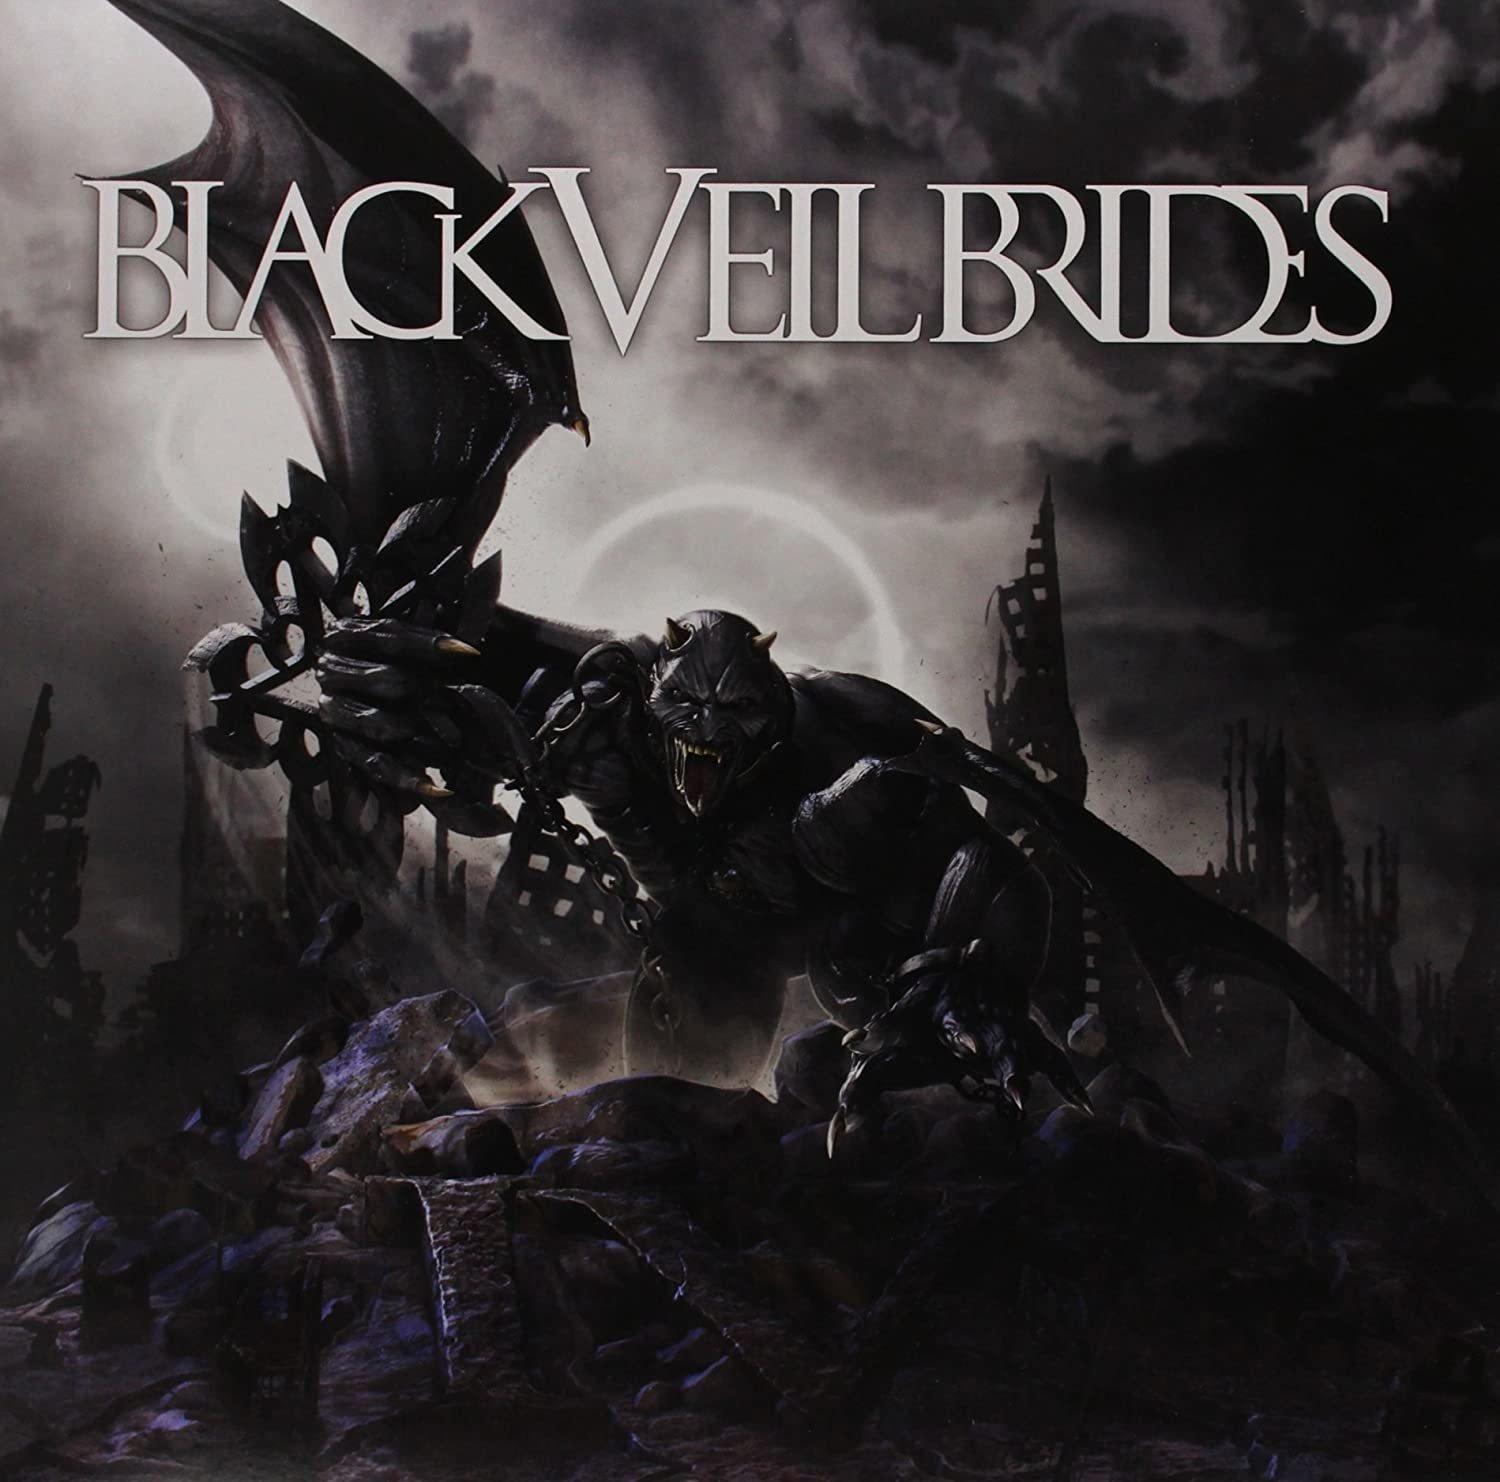 Vinyl Record Black Veil Brides - Black Veil Brides (LP)